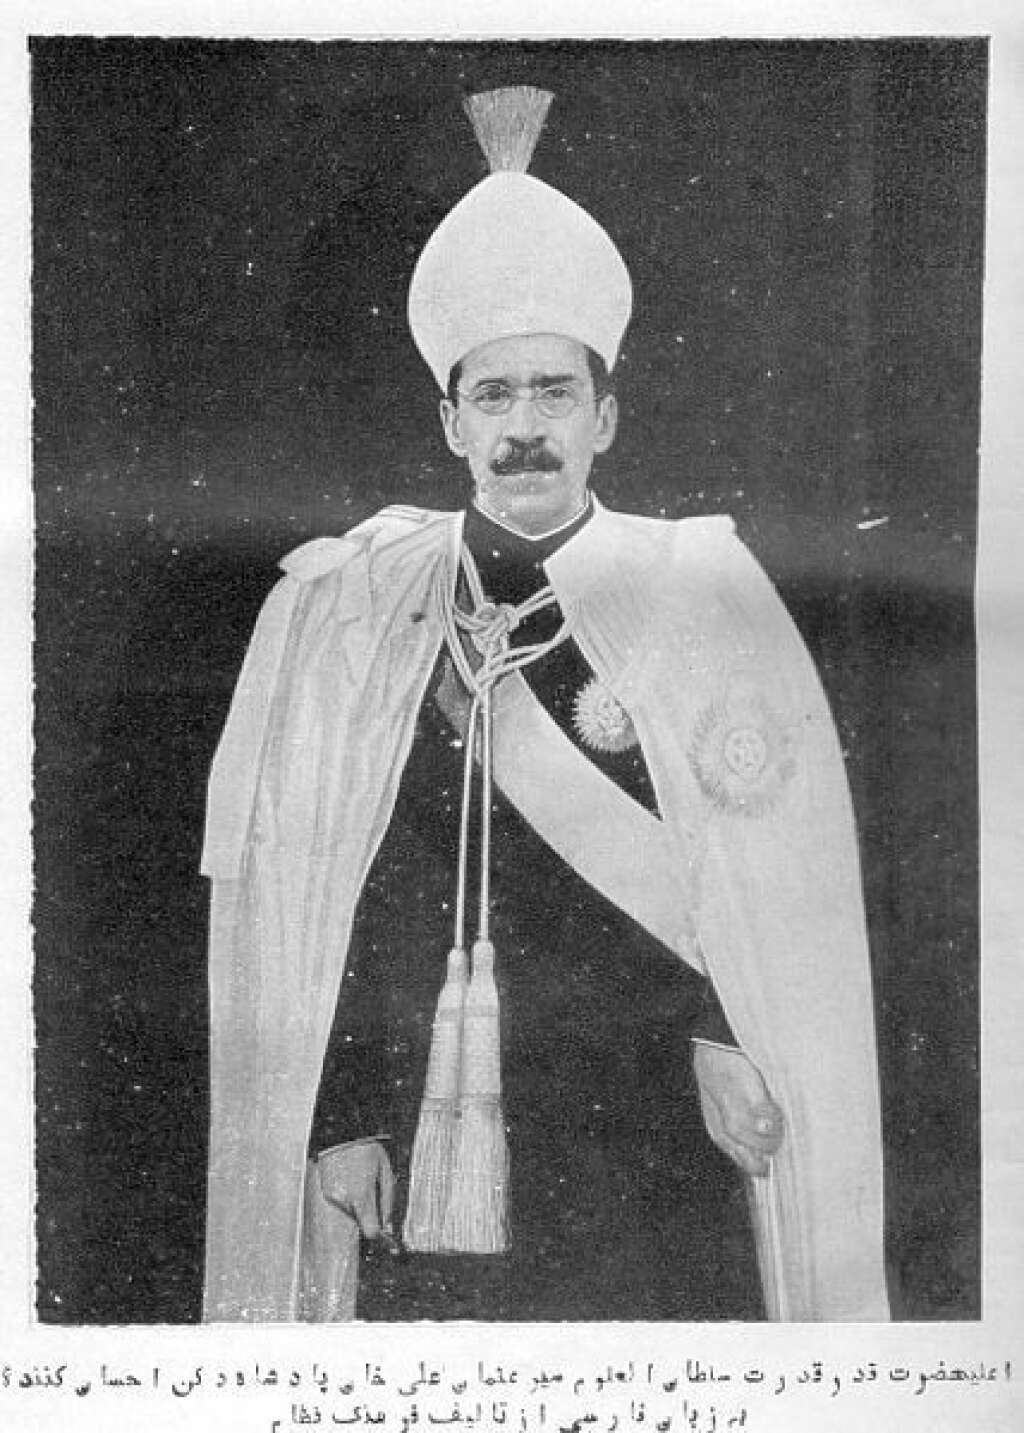 6. Osman Ali Khan, Asaf Jah VII - Dernier dirigeant de l'Hyderabad, (1886-1967) 236 milliards de dollars